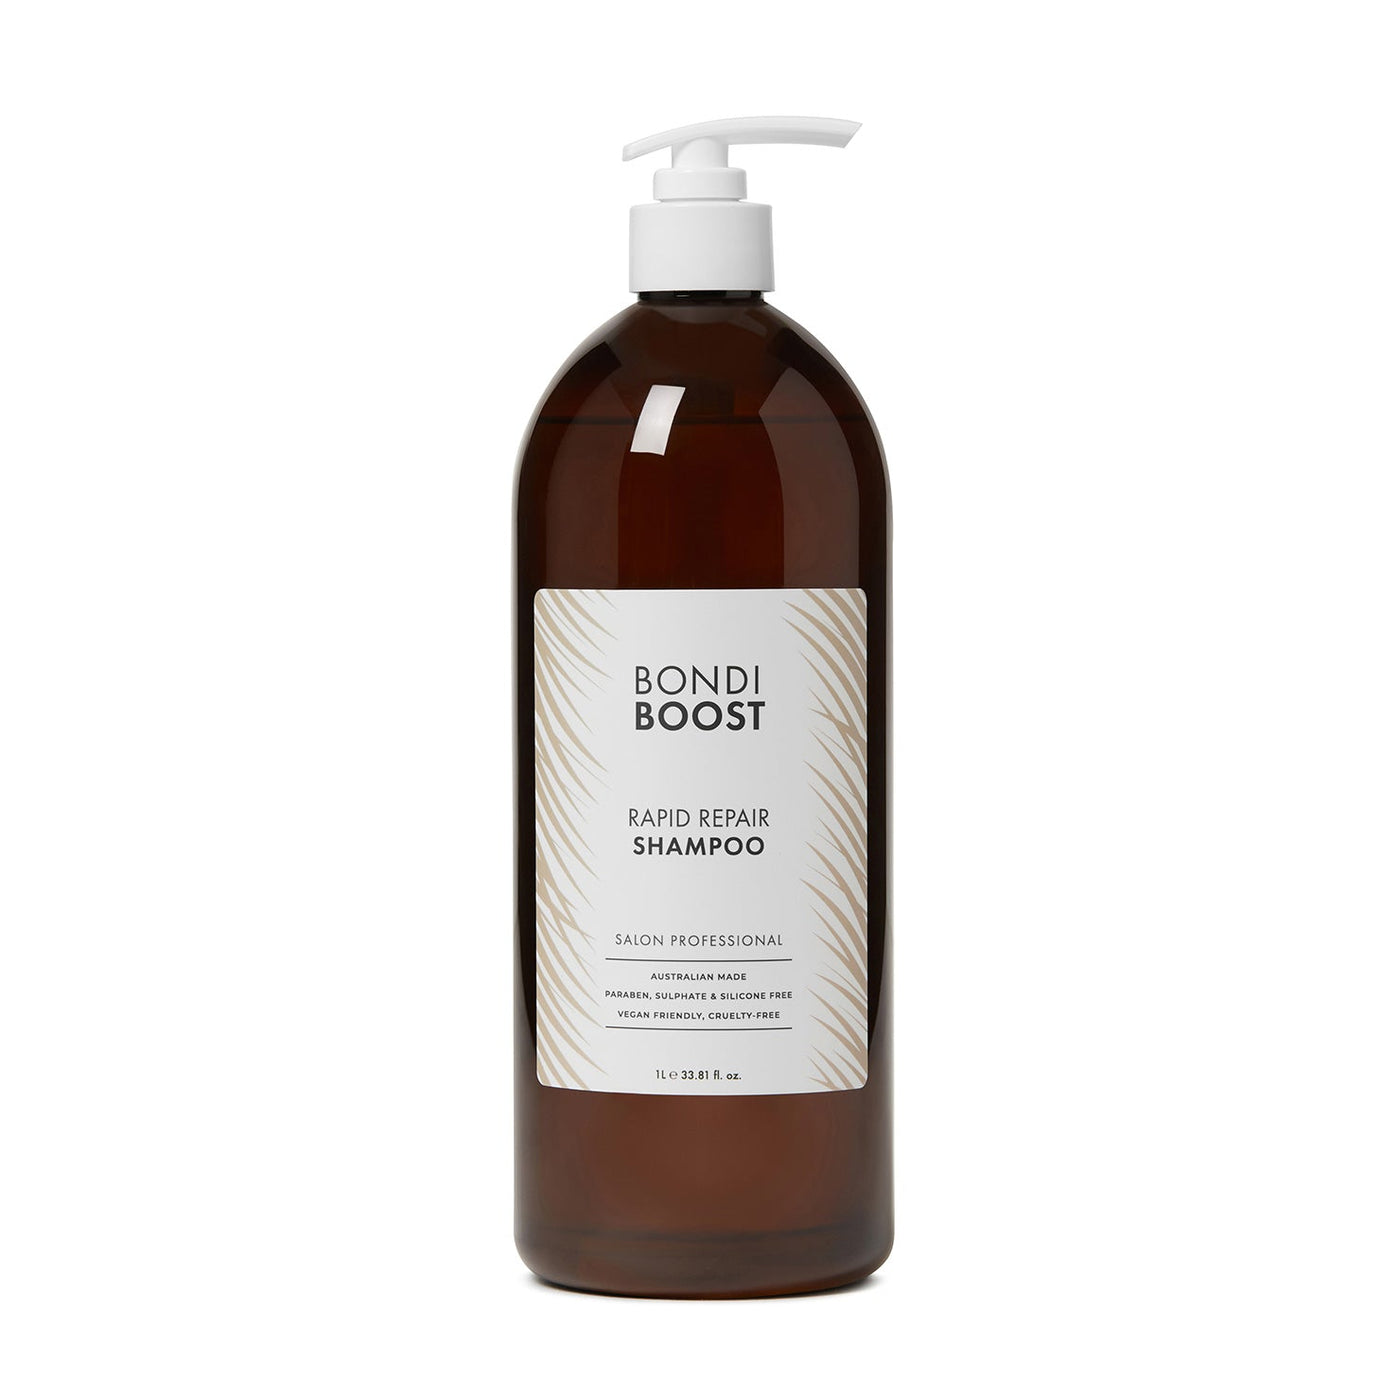 BondiBoost Rapid Repair Shampoo 1 Litre